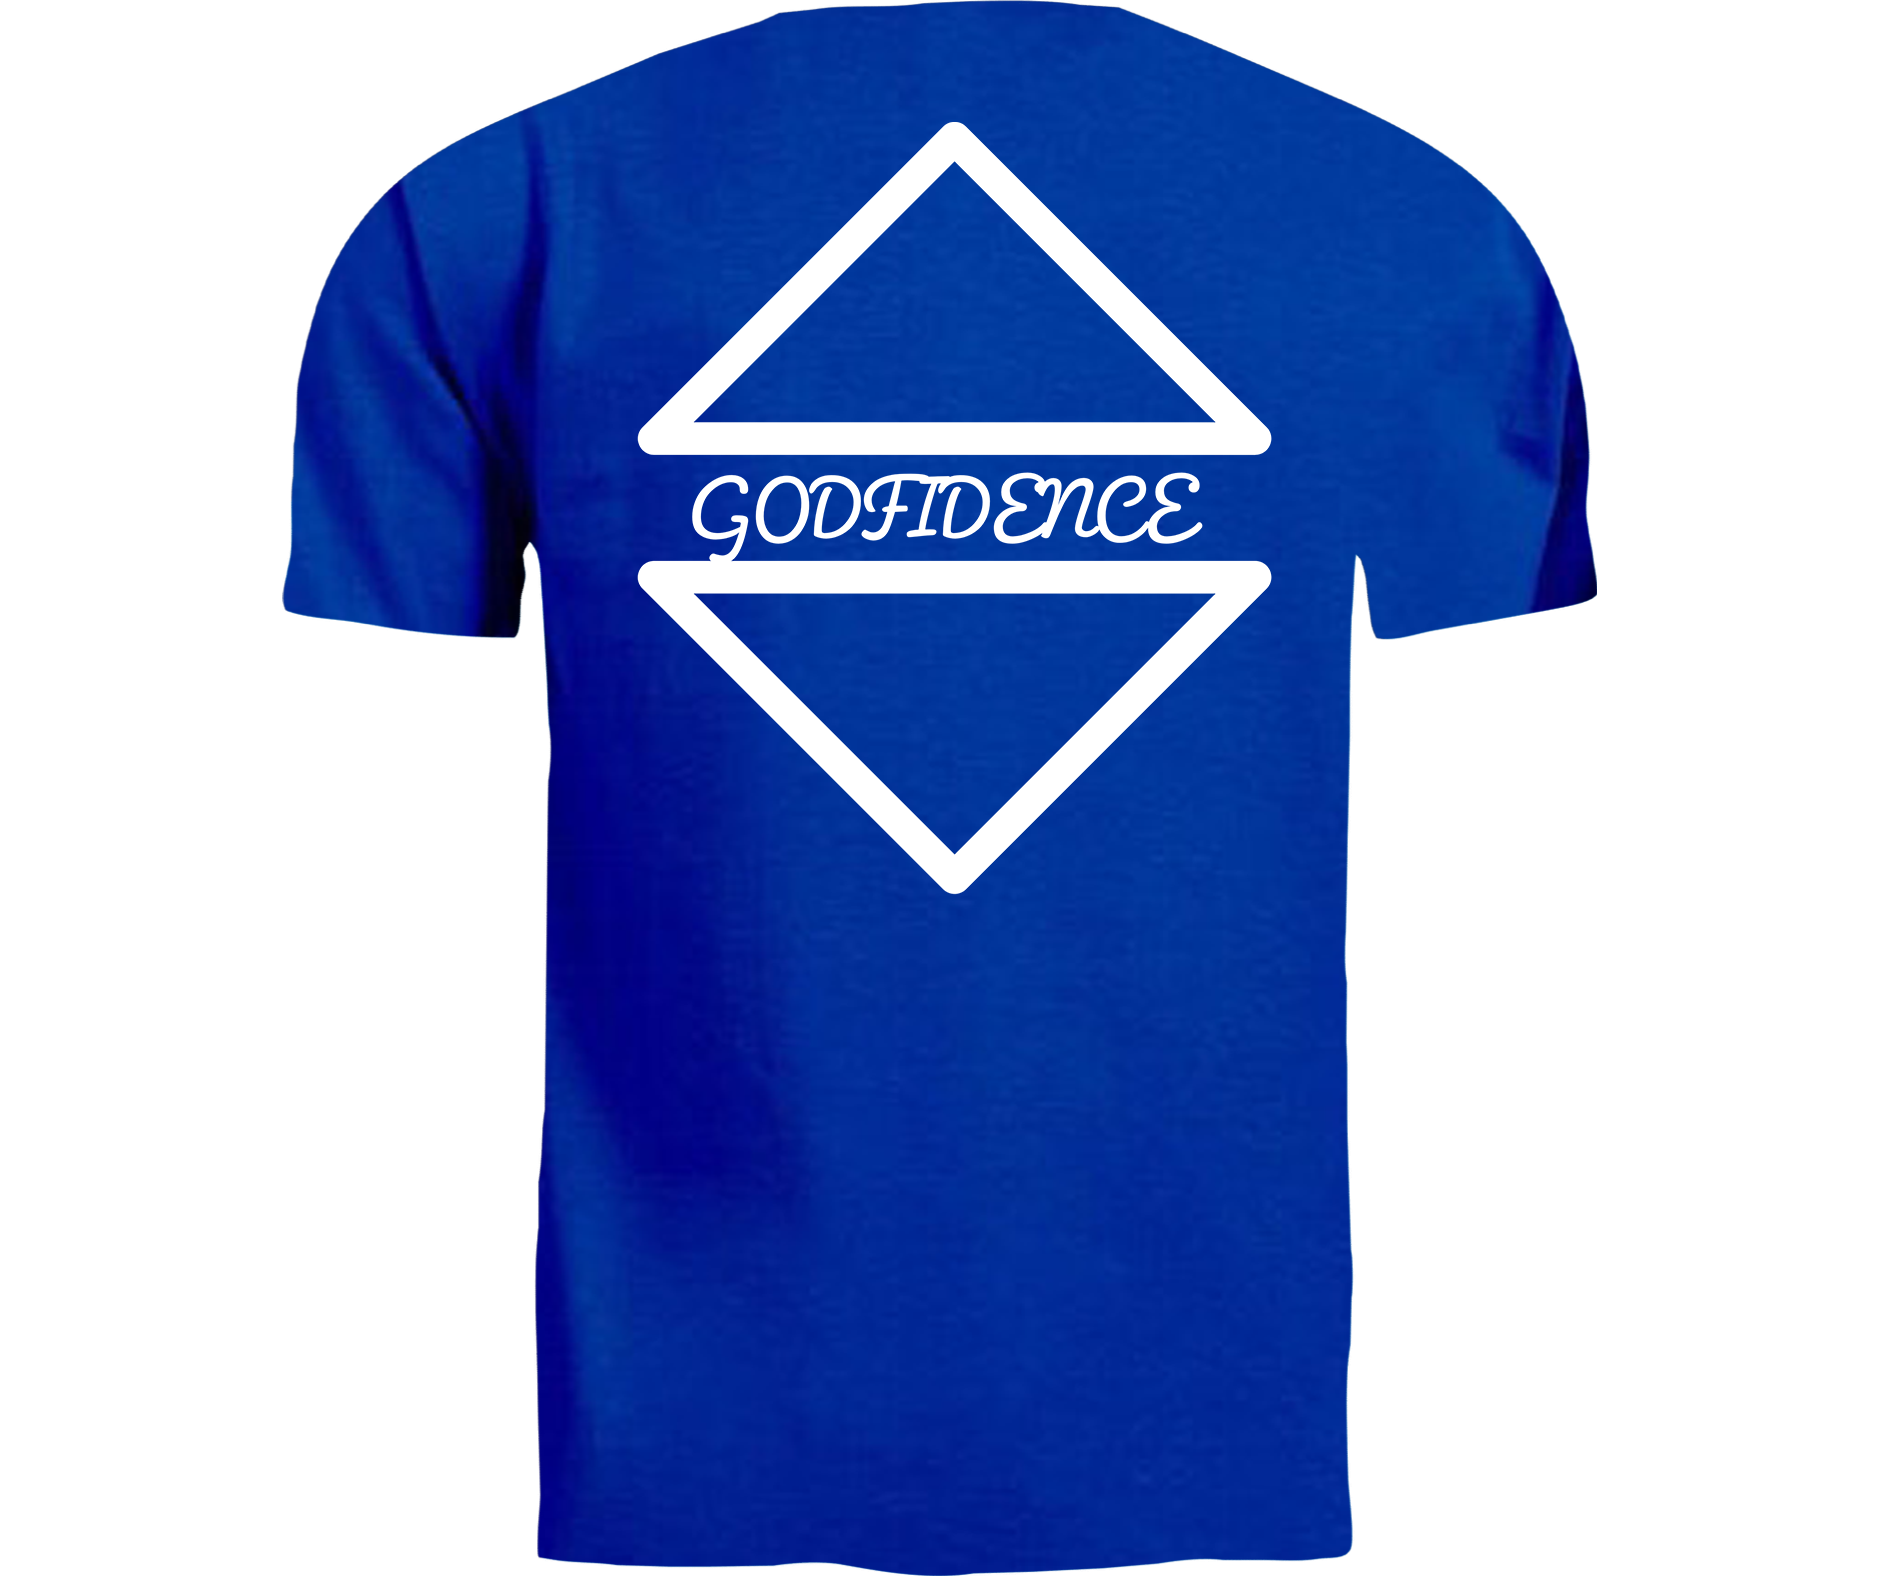 Godfidence (T-Shirt)